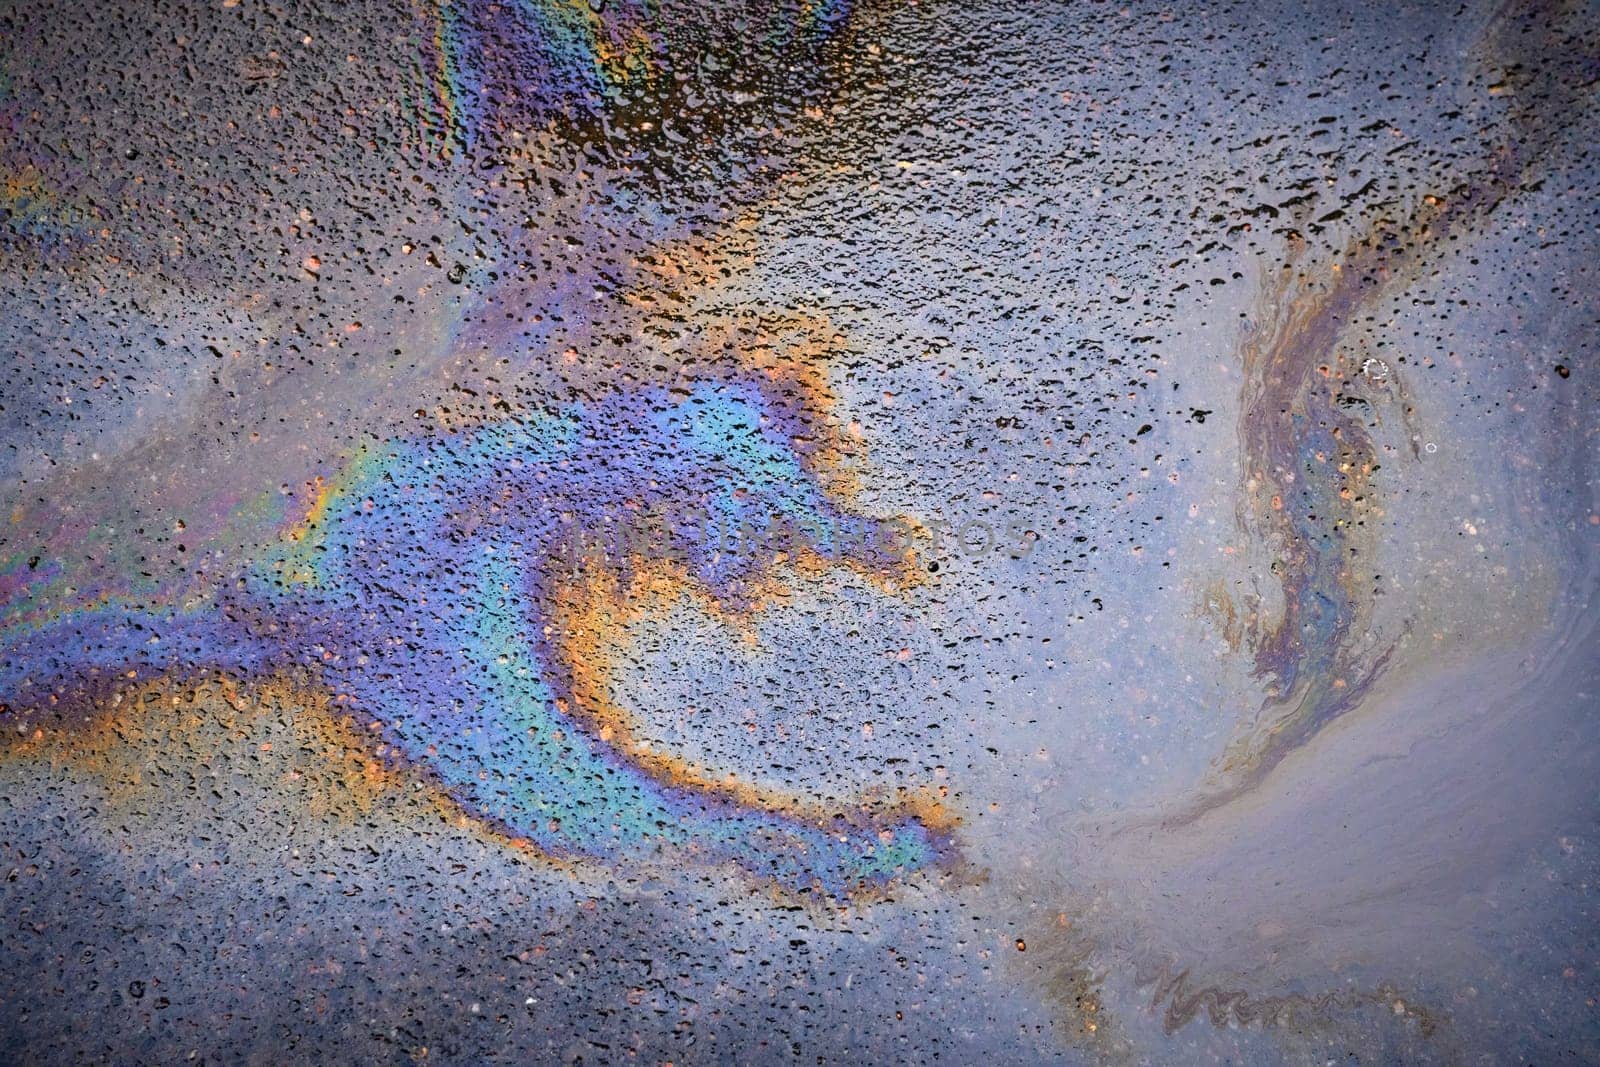 Oil rainbow gasoline spill on asphalt. Rainbow stains of oil and gasoline. by AliaksandrFilimonau